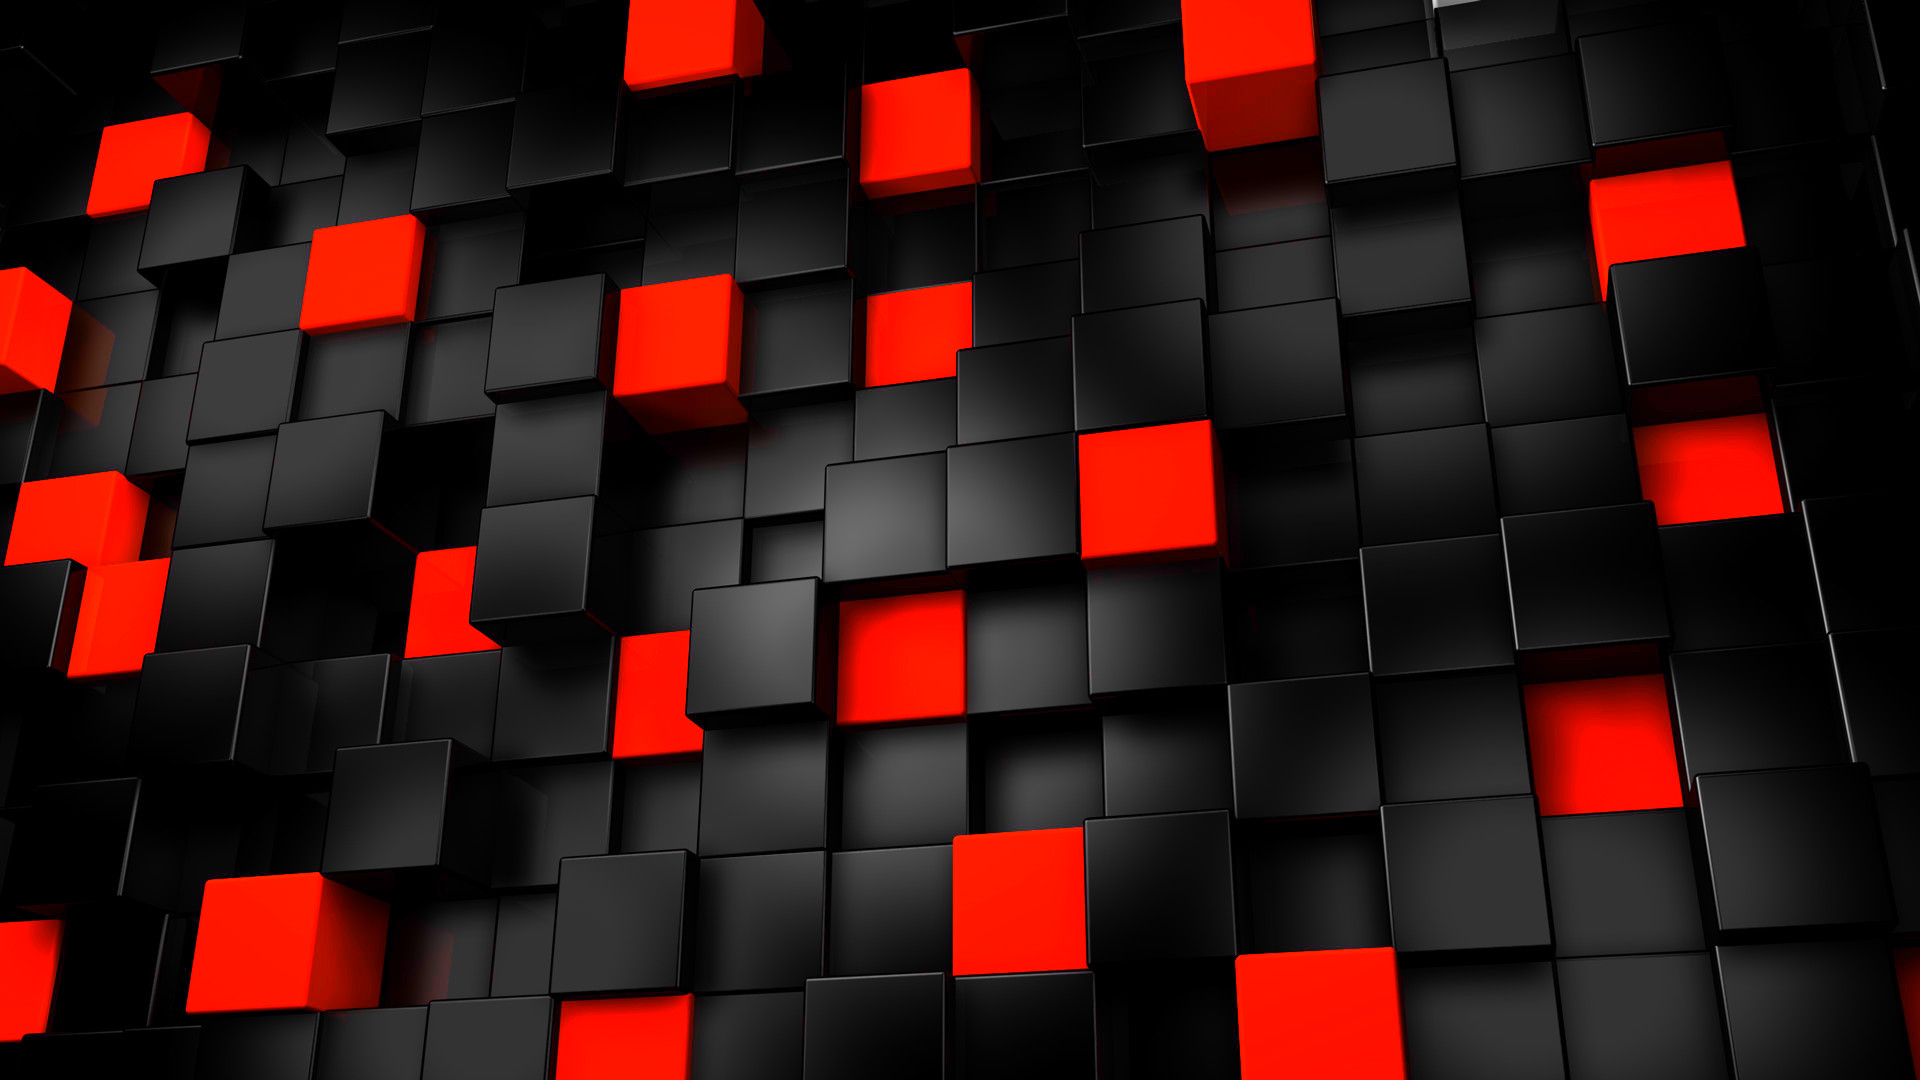 1920x1080 Red And Black Desktop Wallpaper